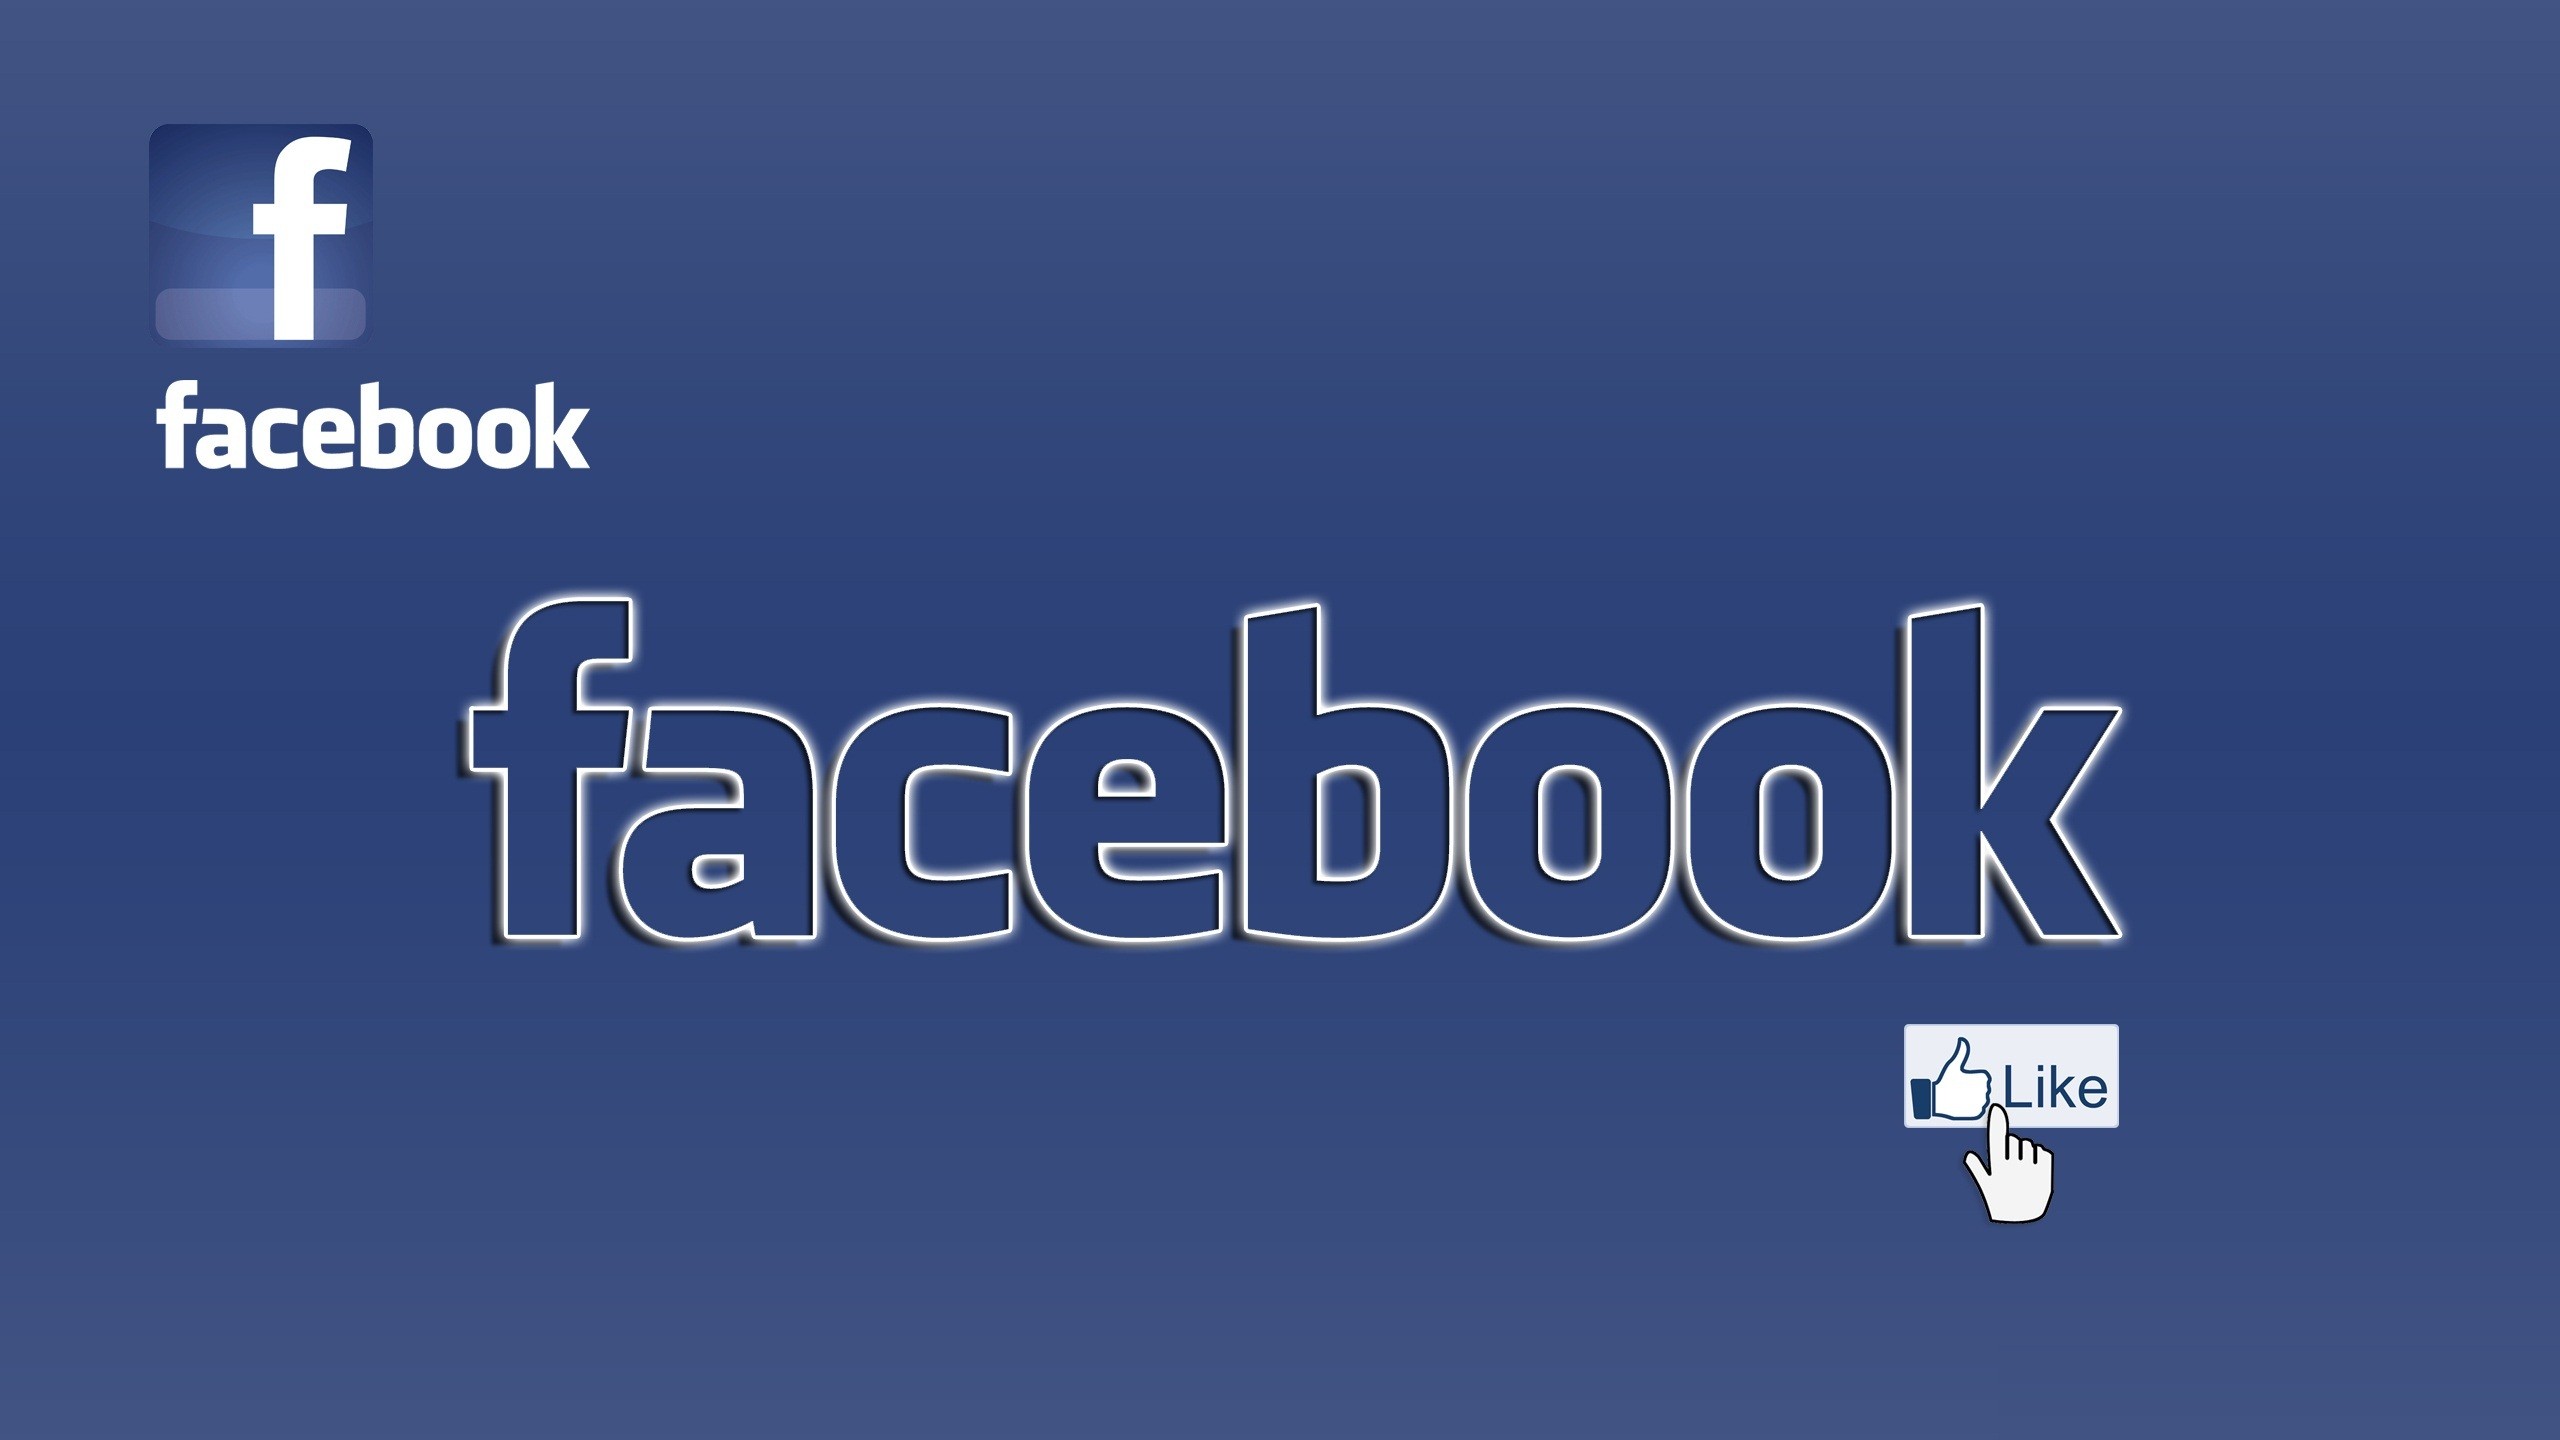 facebook wallpaper hd,text,font,blue,product,logo